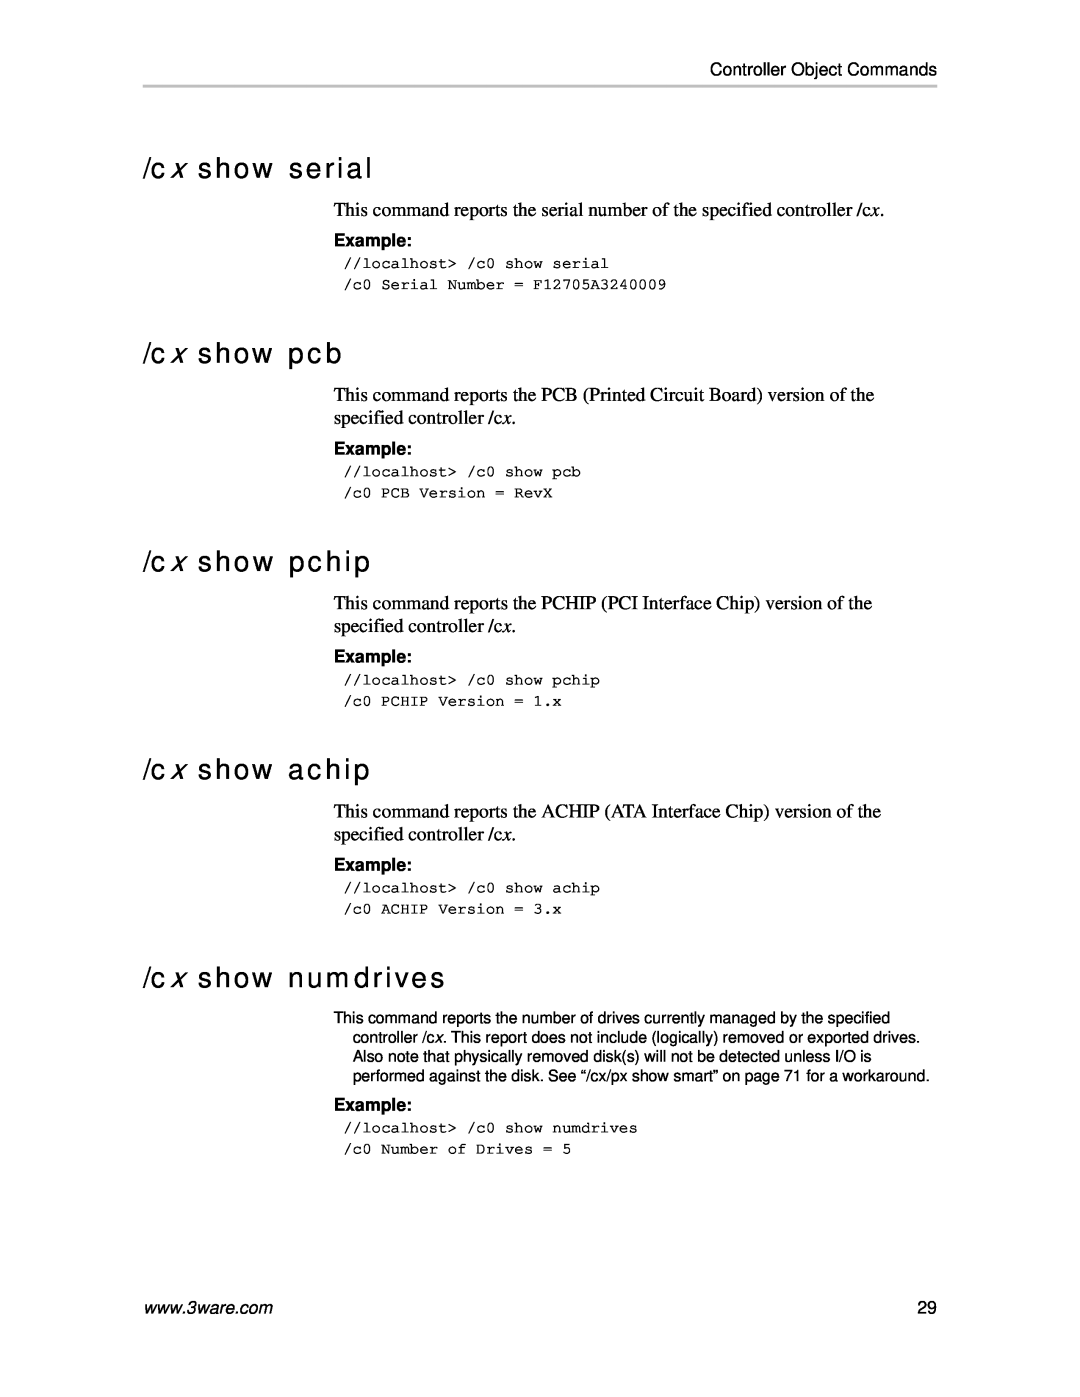 AMCC 9590SE-4ME manual cx show serial, cx show pcb, cx show pchip, cx show achip, cx show numdrives 